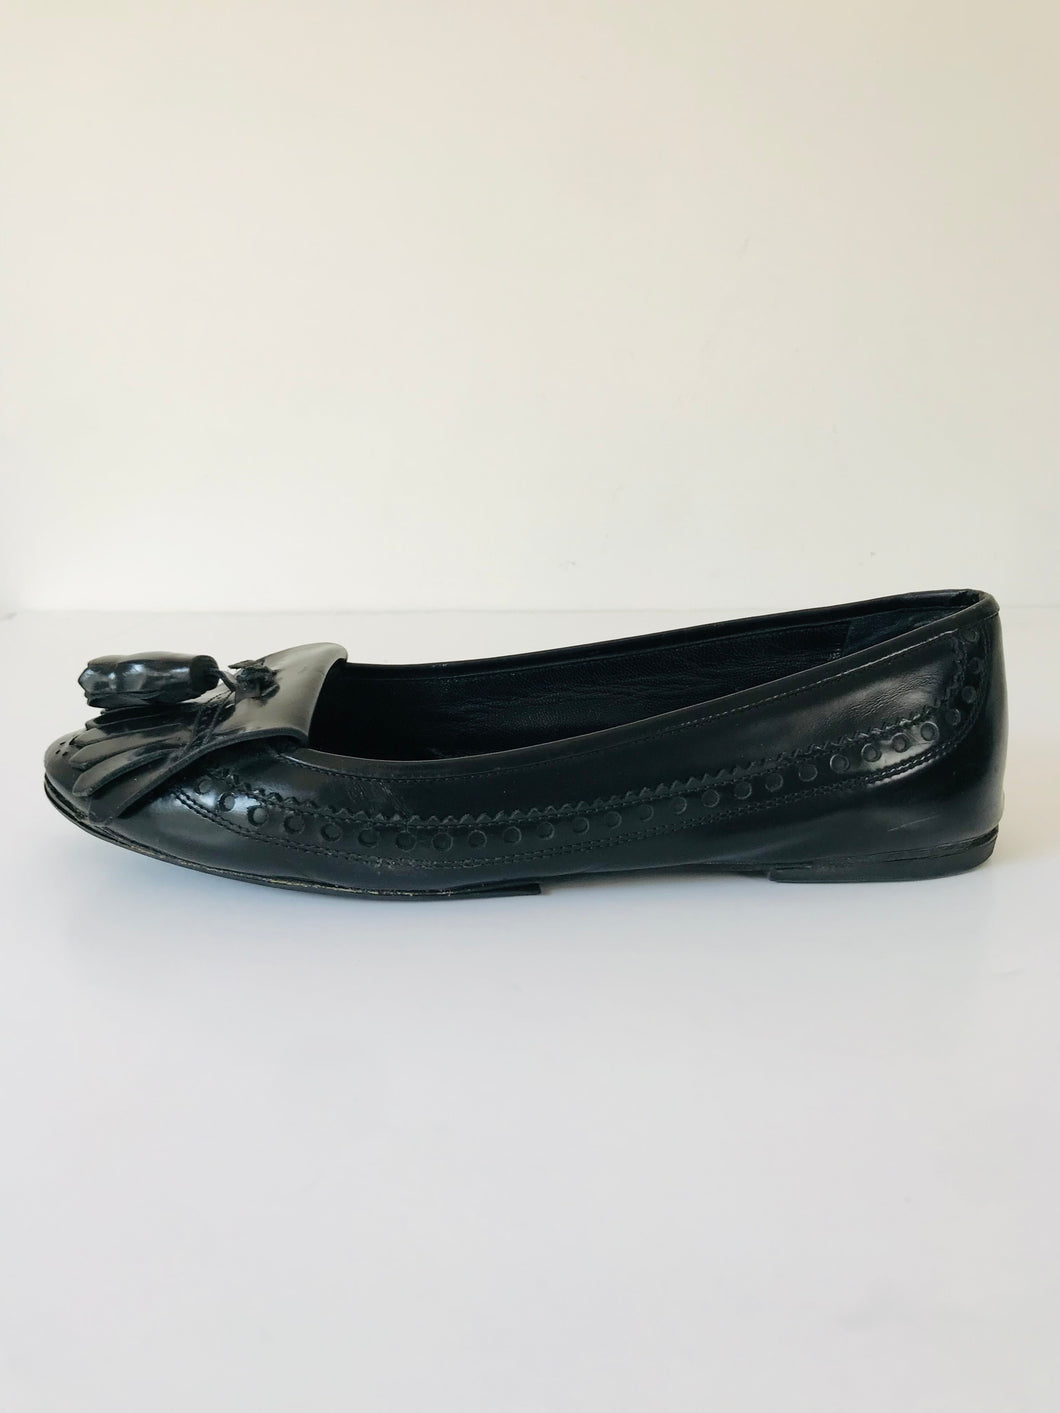 Burberry Women's Leather Tassel Loafers | 39 UK6 | Black